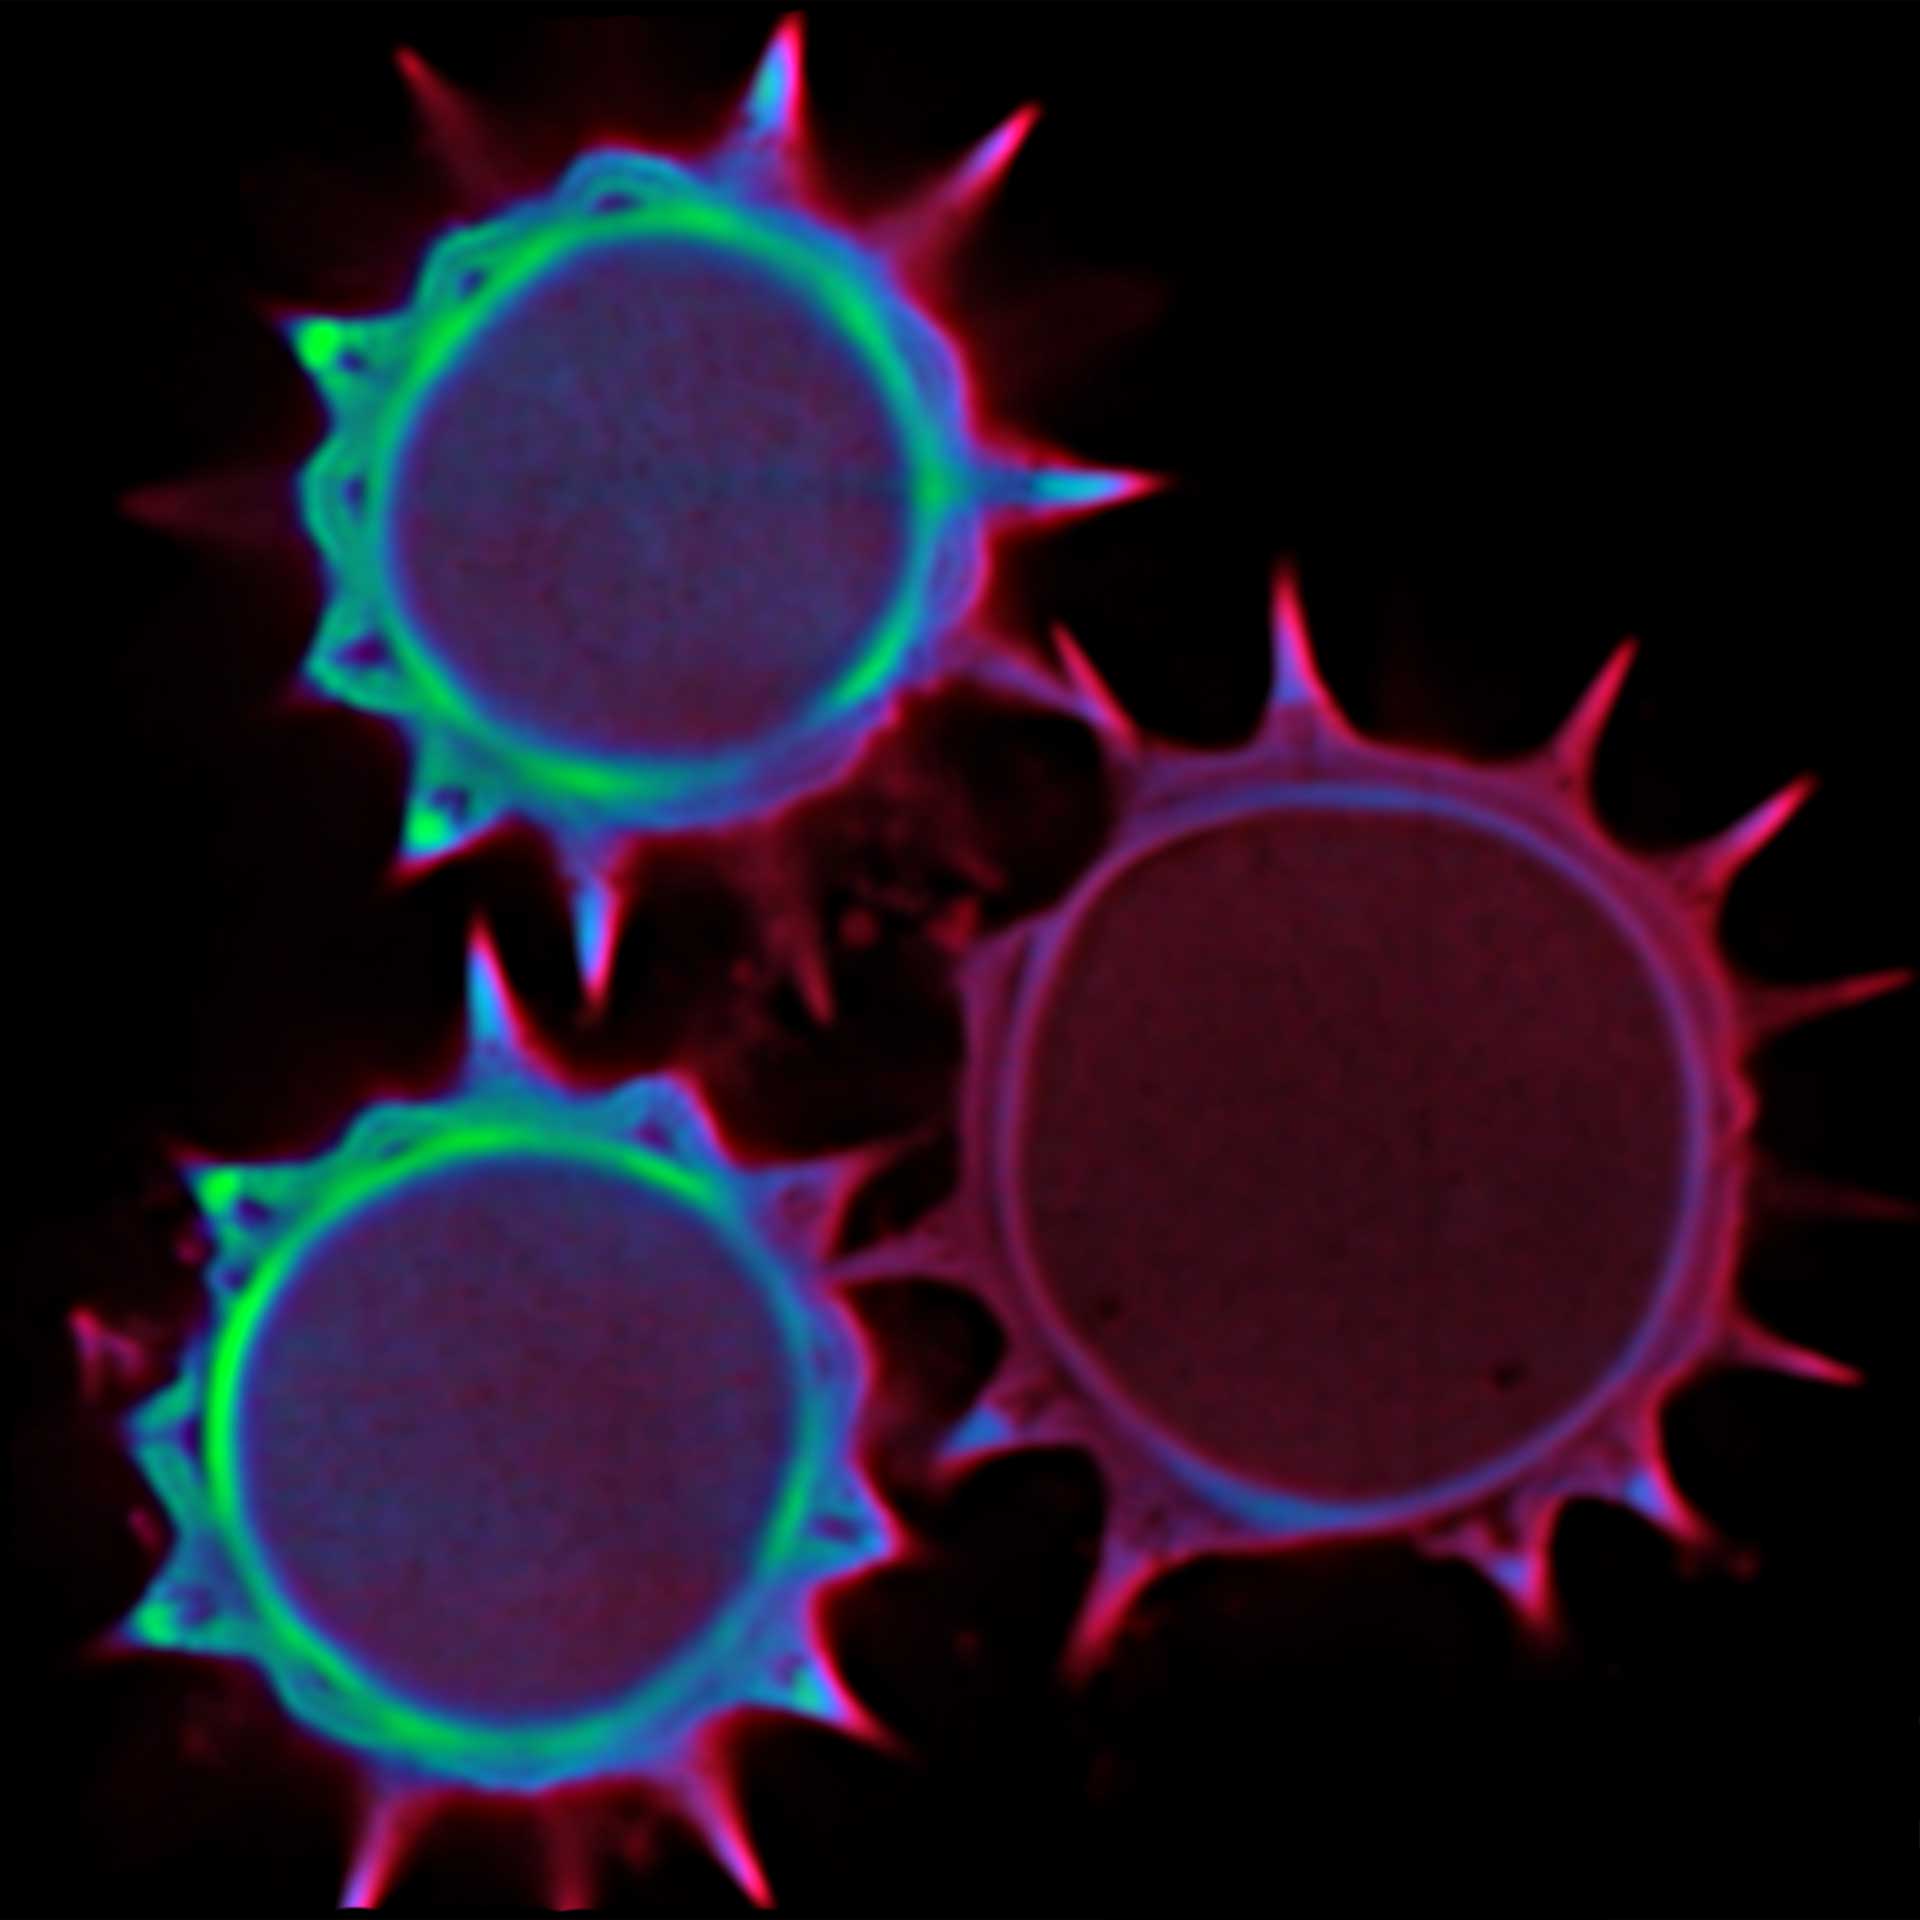 Pollen autofluorescence lifetime image in super-resolution STED